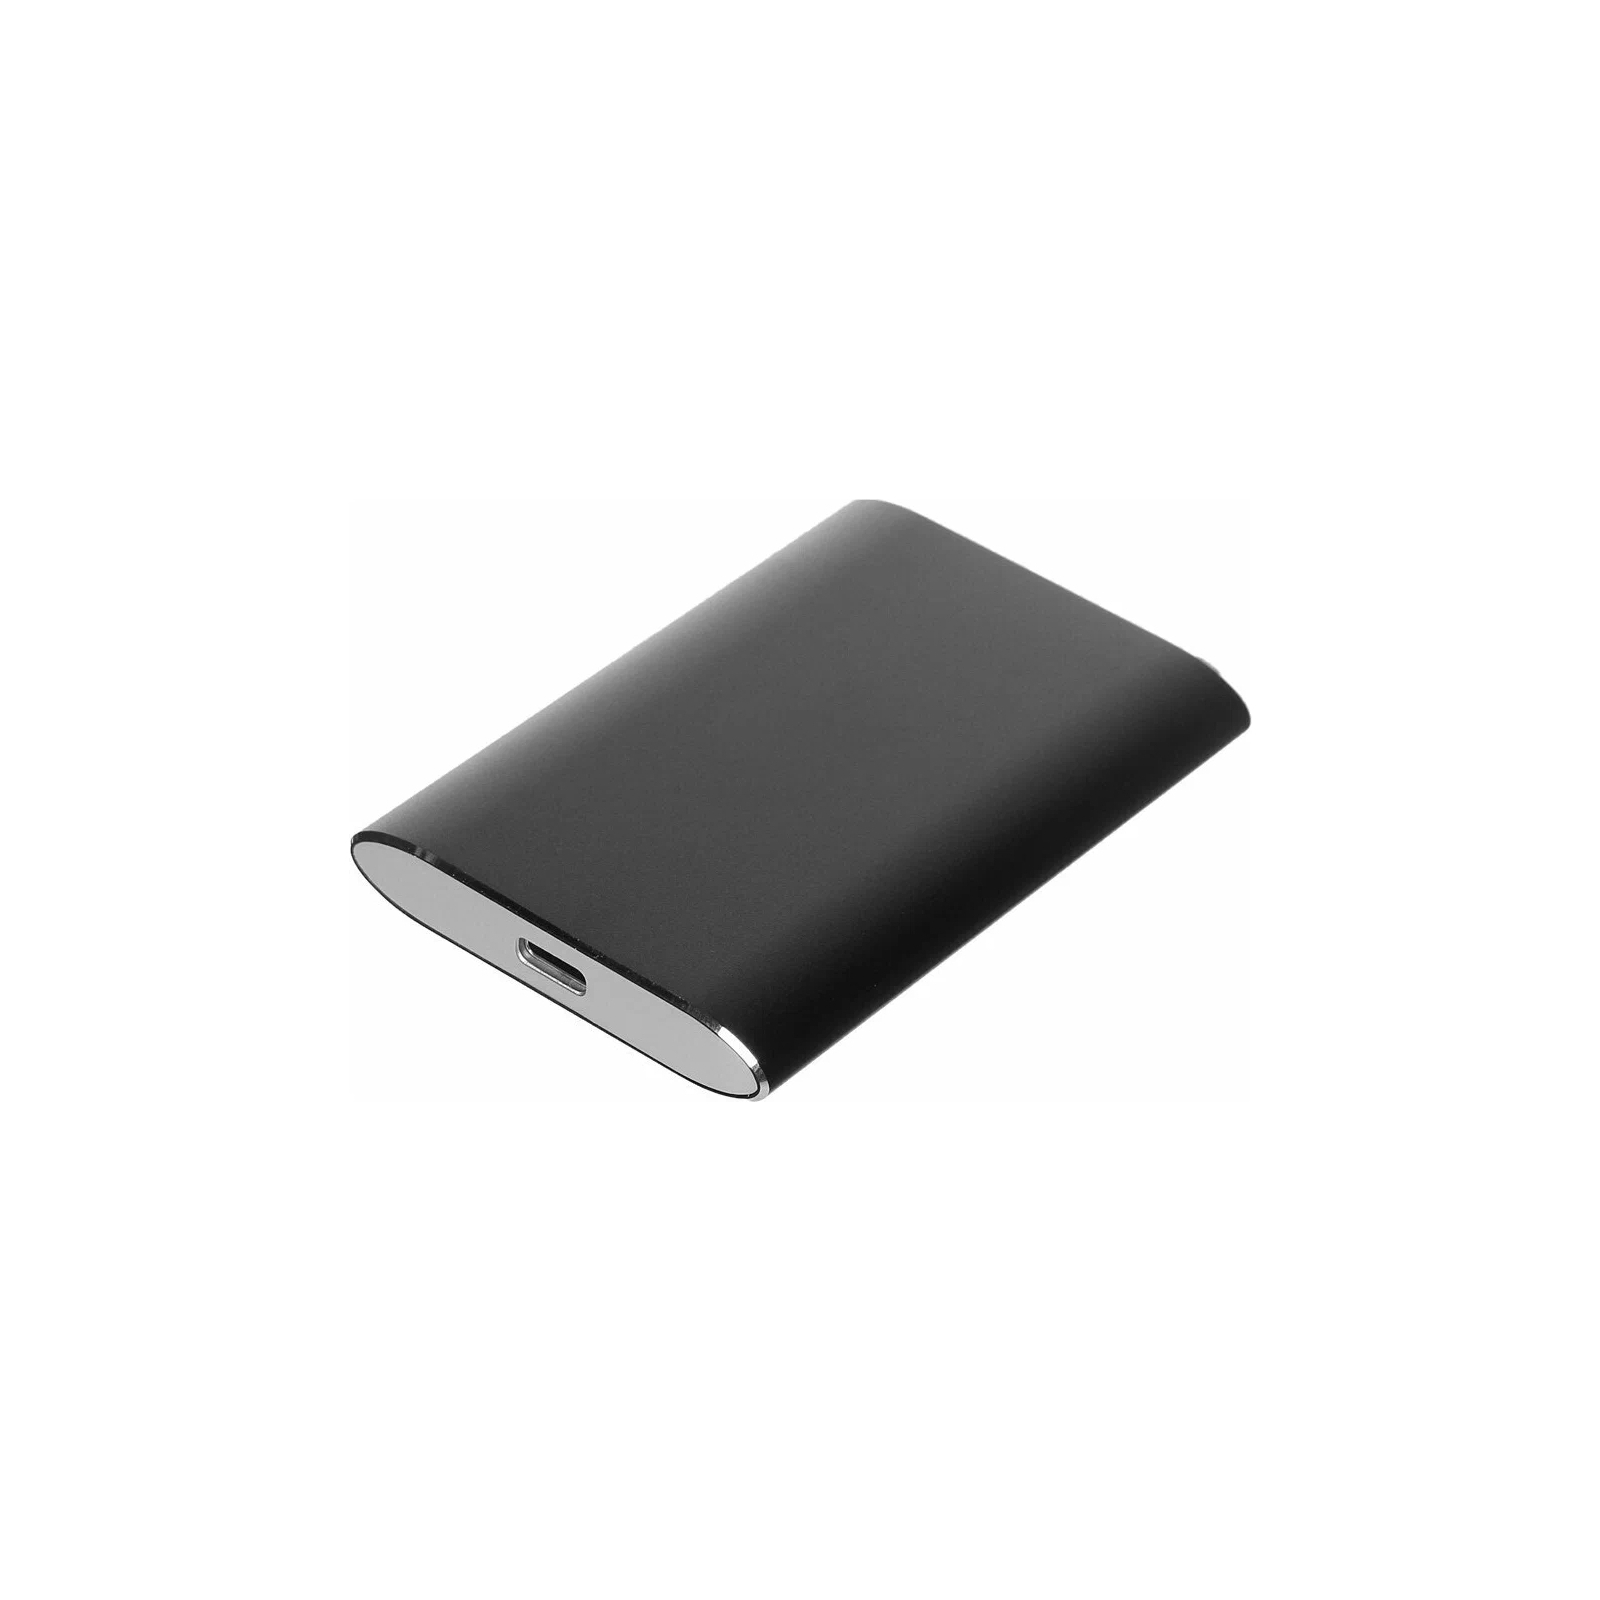 Накопитель SSD USB 3.2 120GB P500 HP (6FR73AA) изображение 2